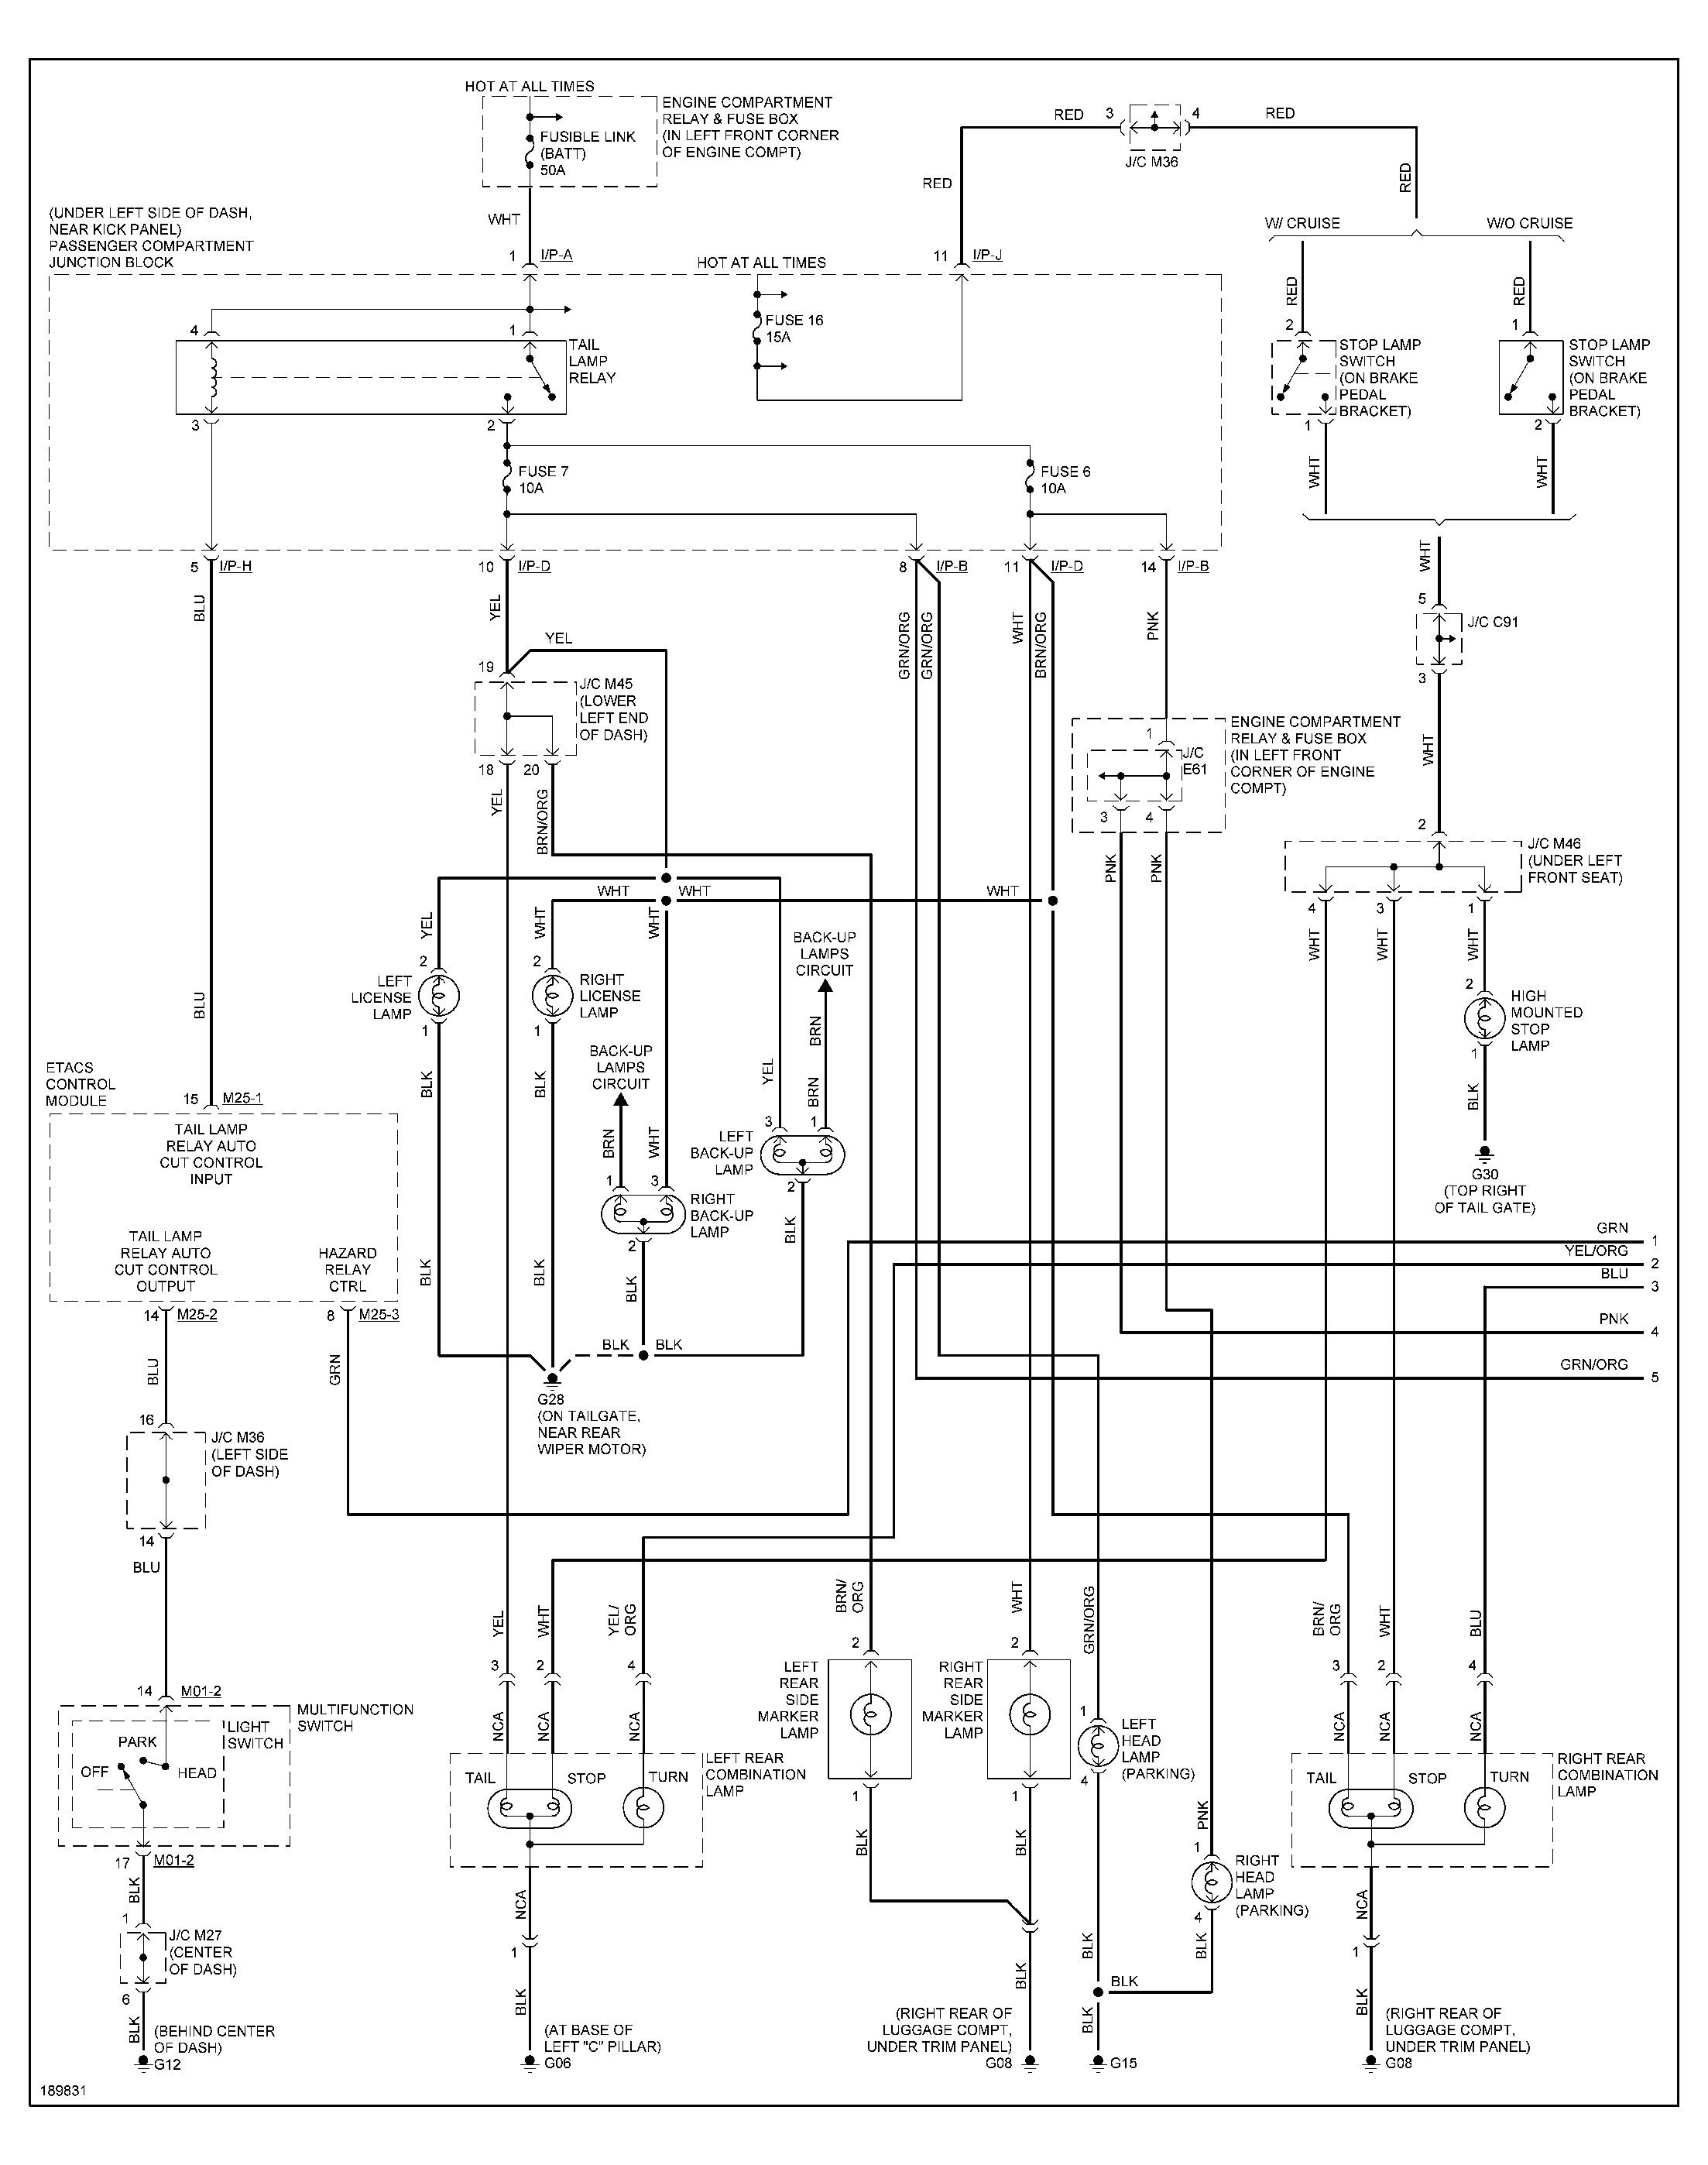 switch diagram relay wiring 06 sonata online manuual of wiring diagram switch diagram relay wiring 06 sonata